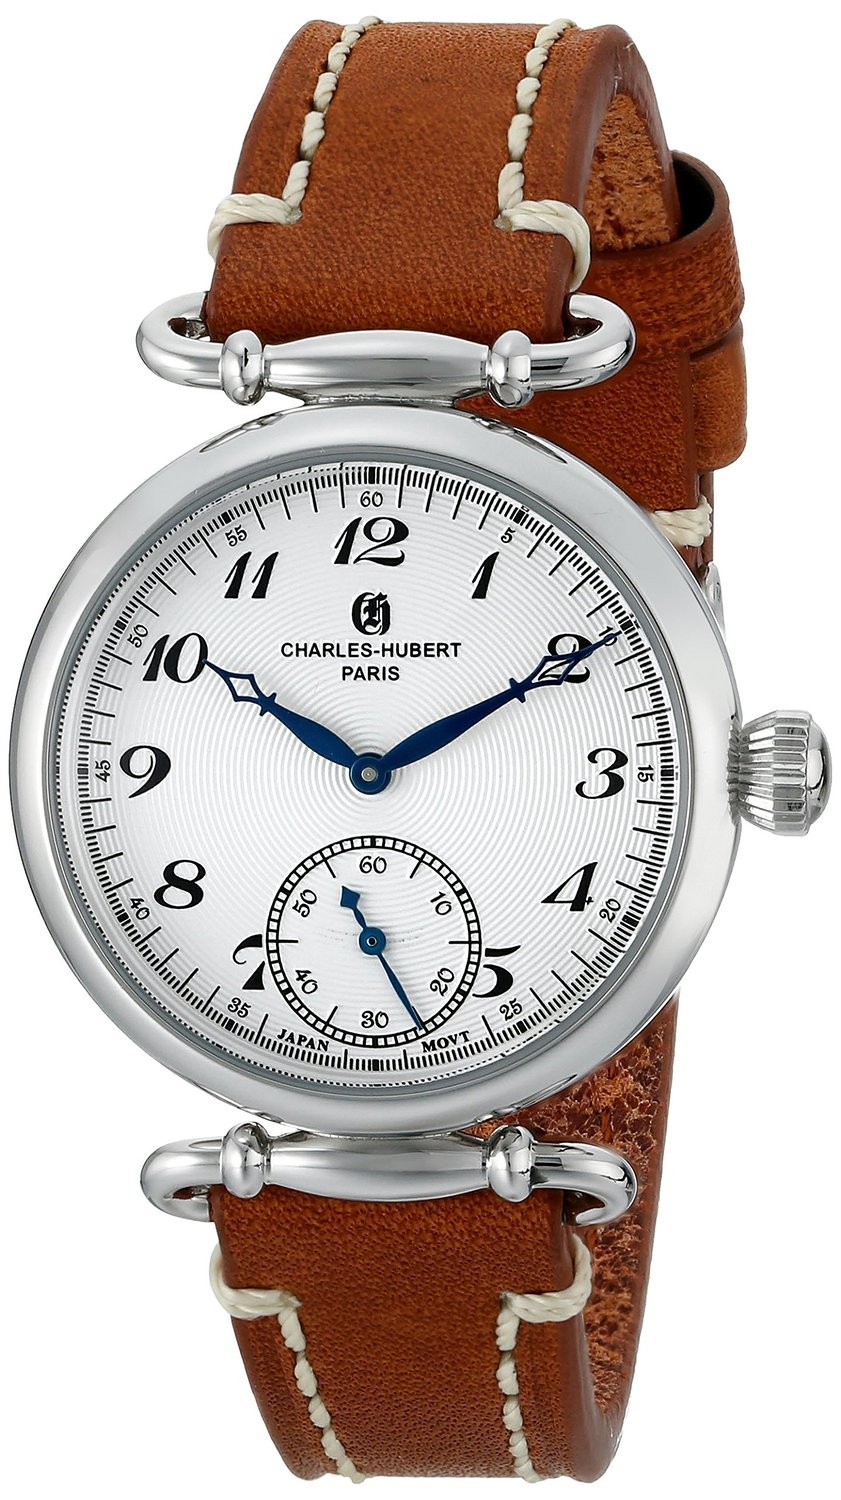 Charles-Hubert Paris Women's Stainless Steel Quartz Watch